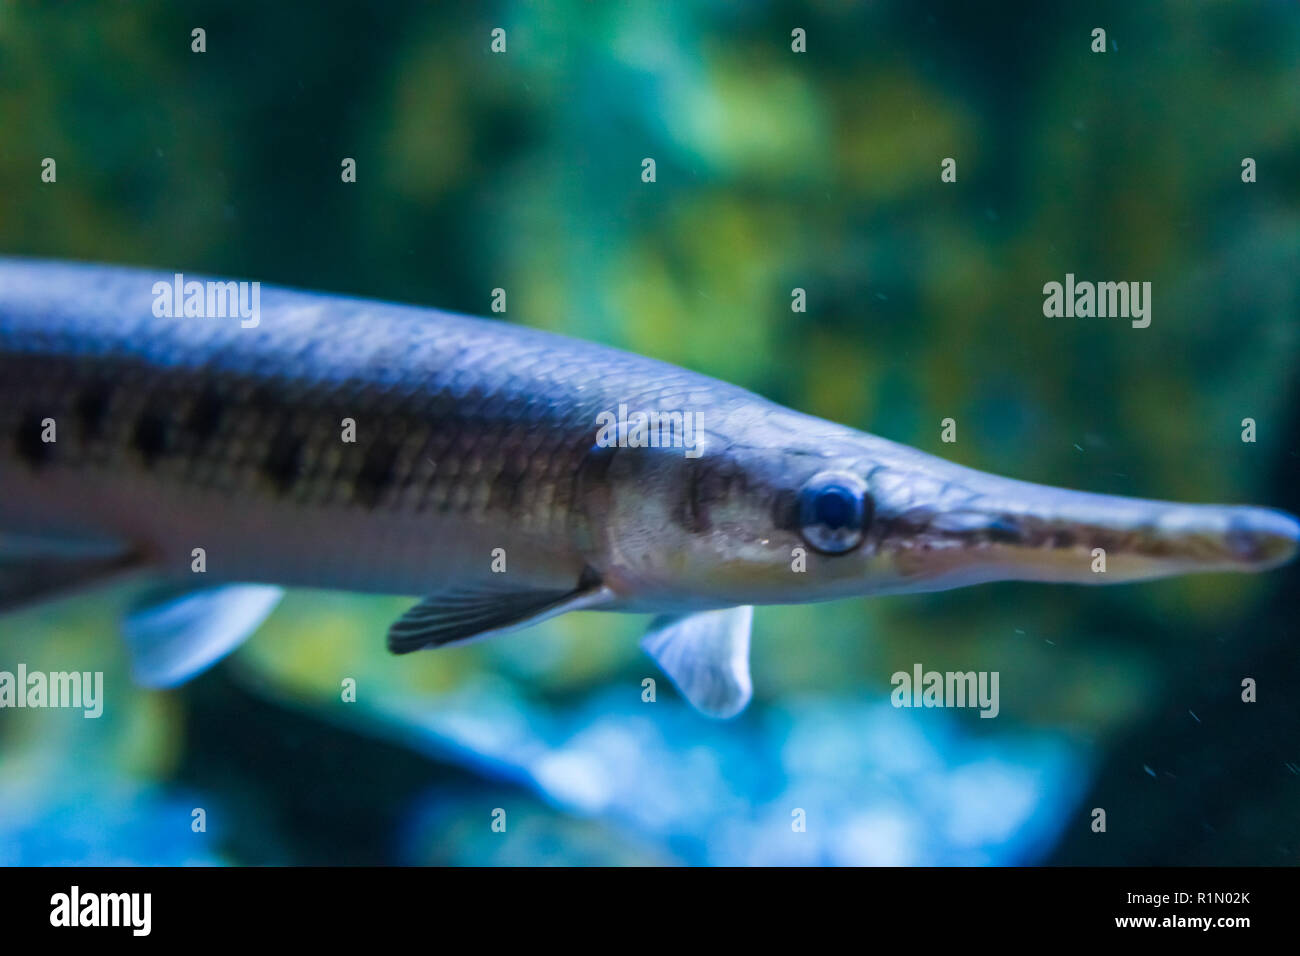 longnose gar also know as needlenose gar a tropical fish from america and mexico closeup face portrait Stock Photo